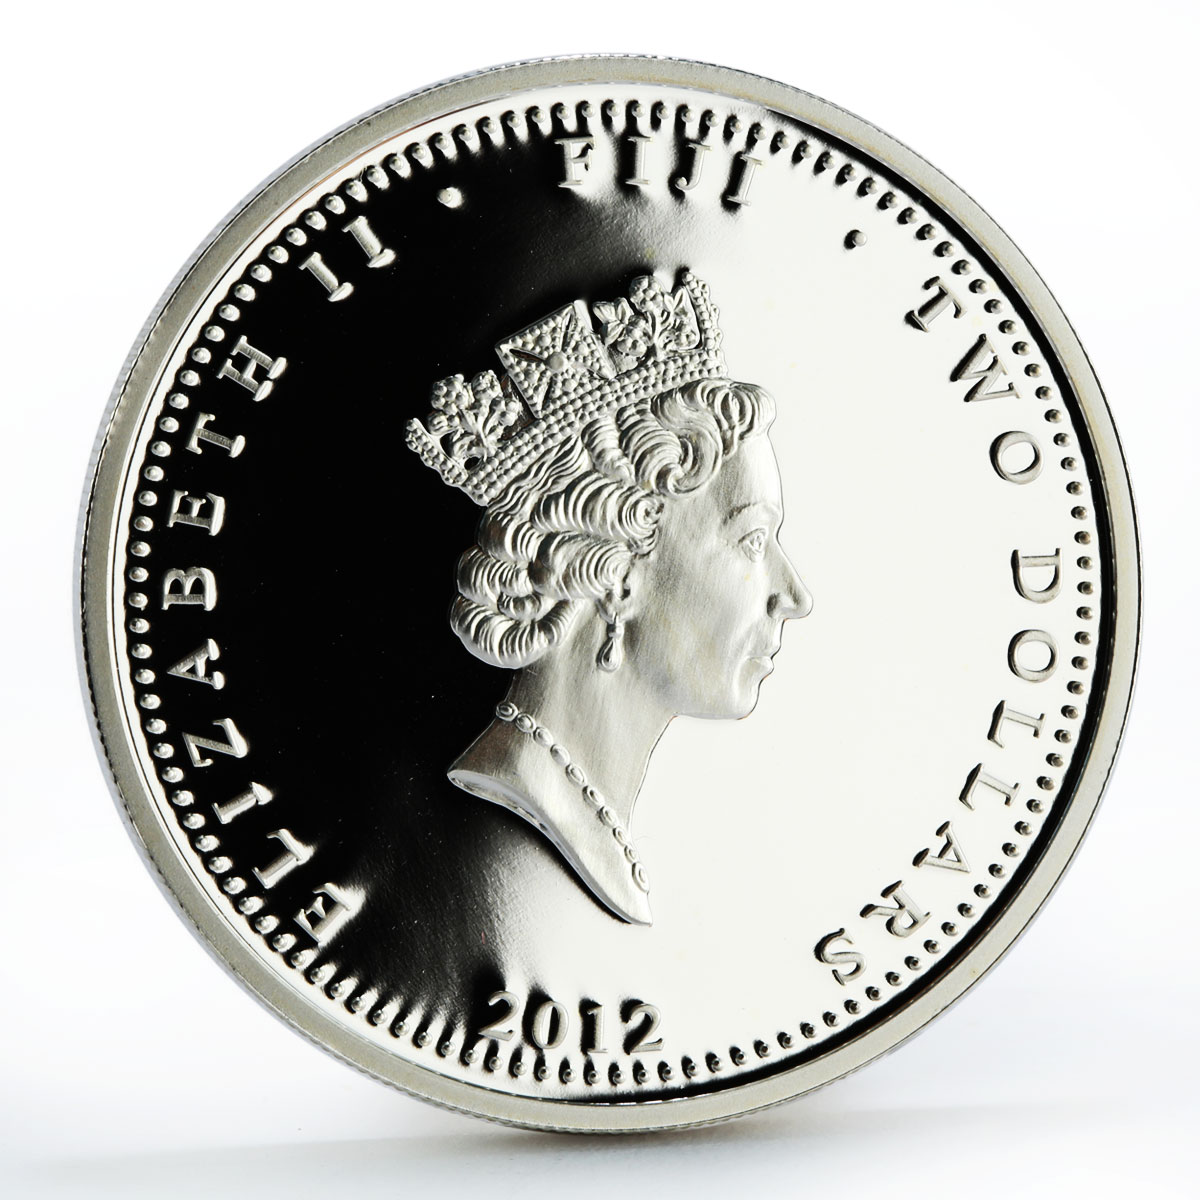 Fiji 2 dollars Russian Emperor Alexander II proof colored silver coin 2012